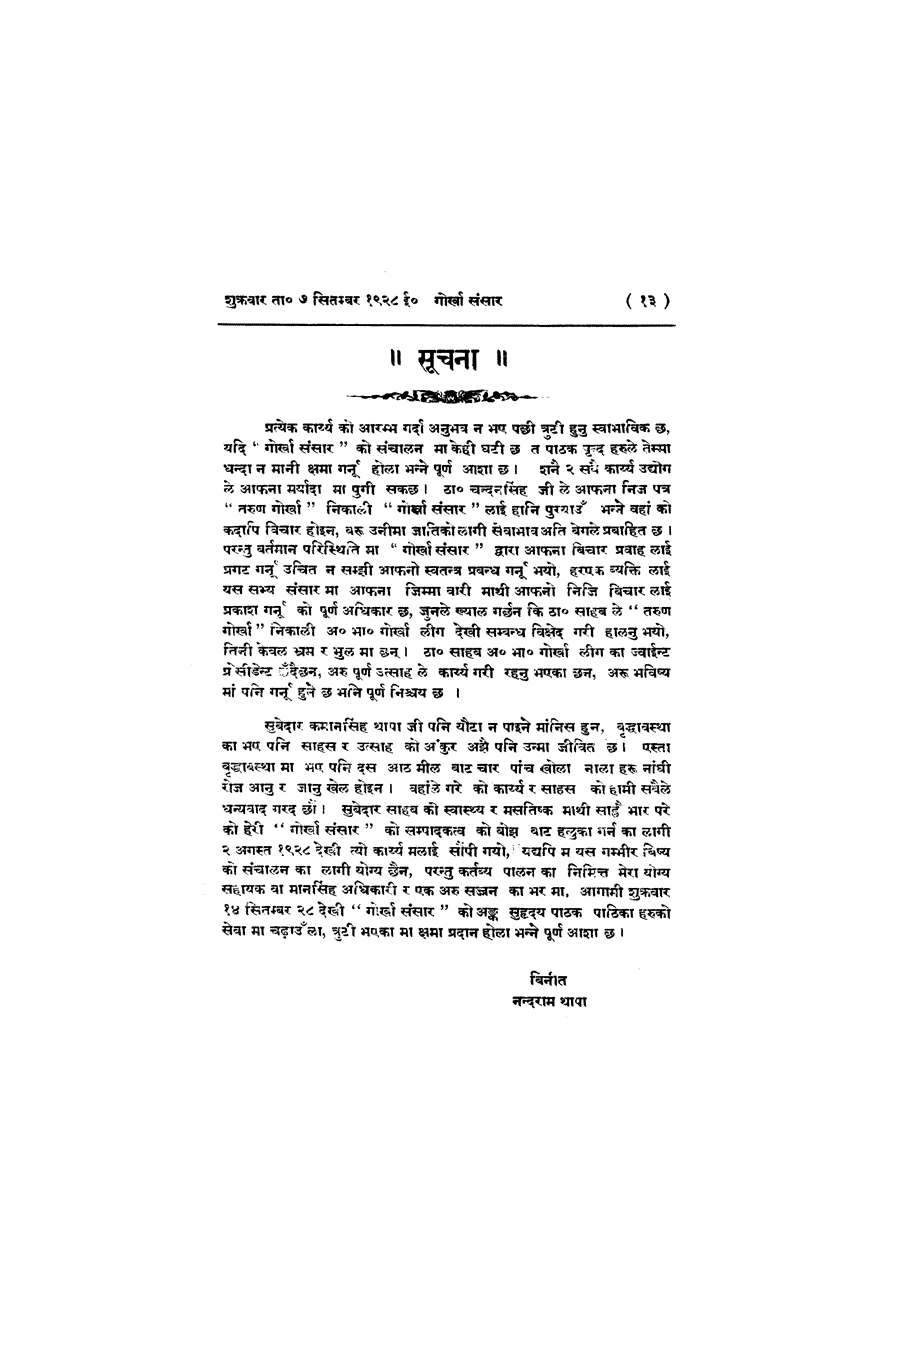 Gorkha Sansar, 7 Sept 1928, page 3